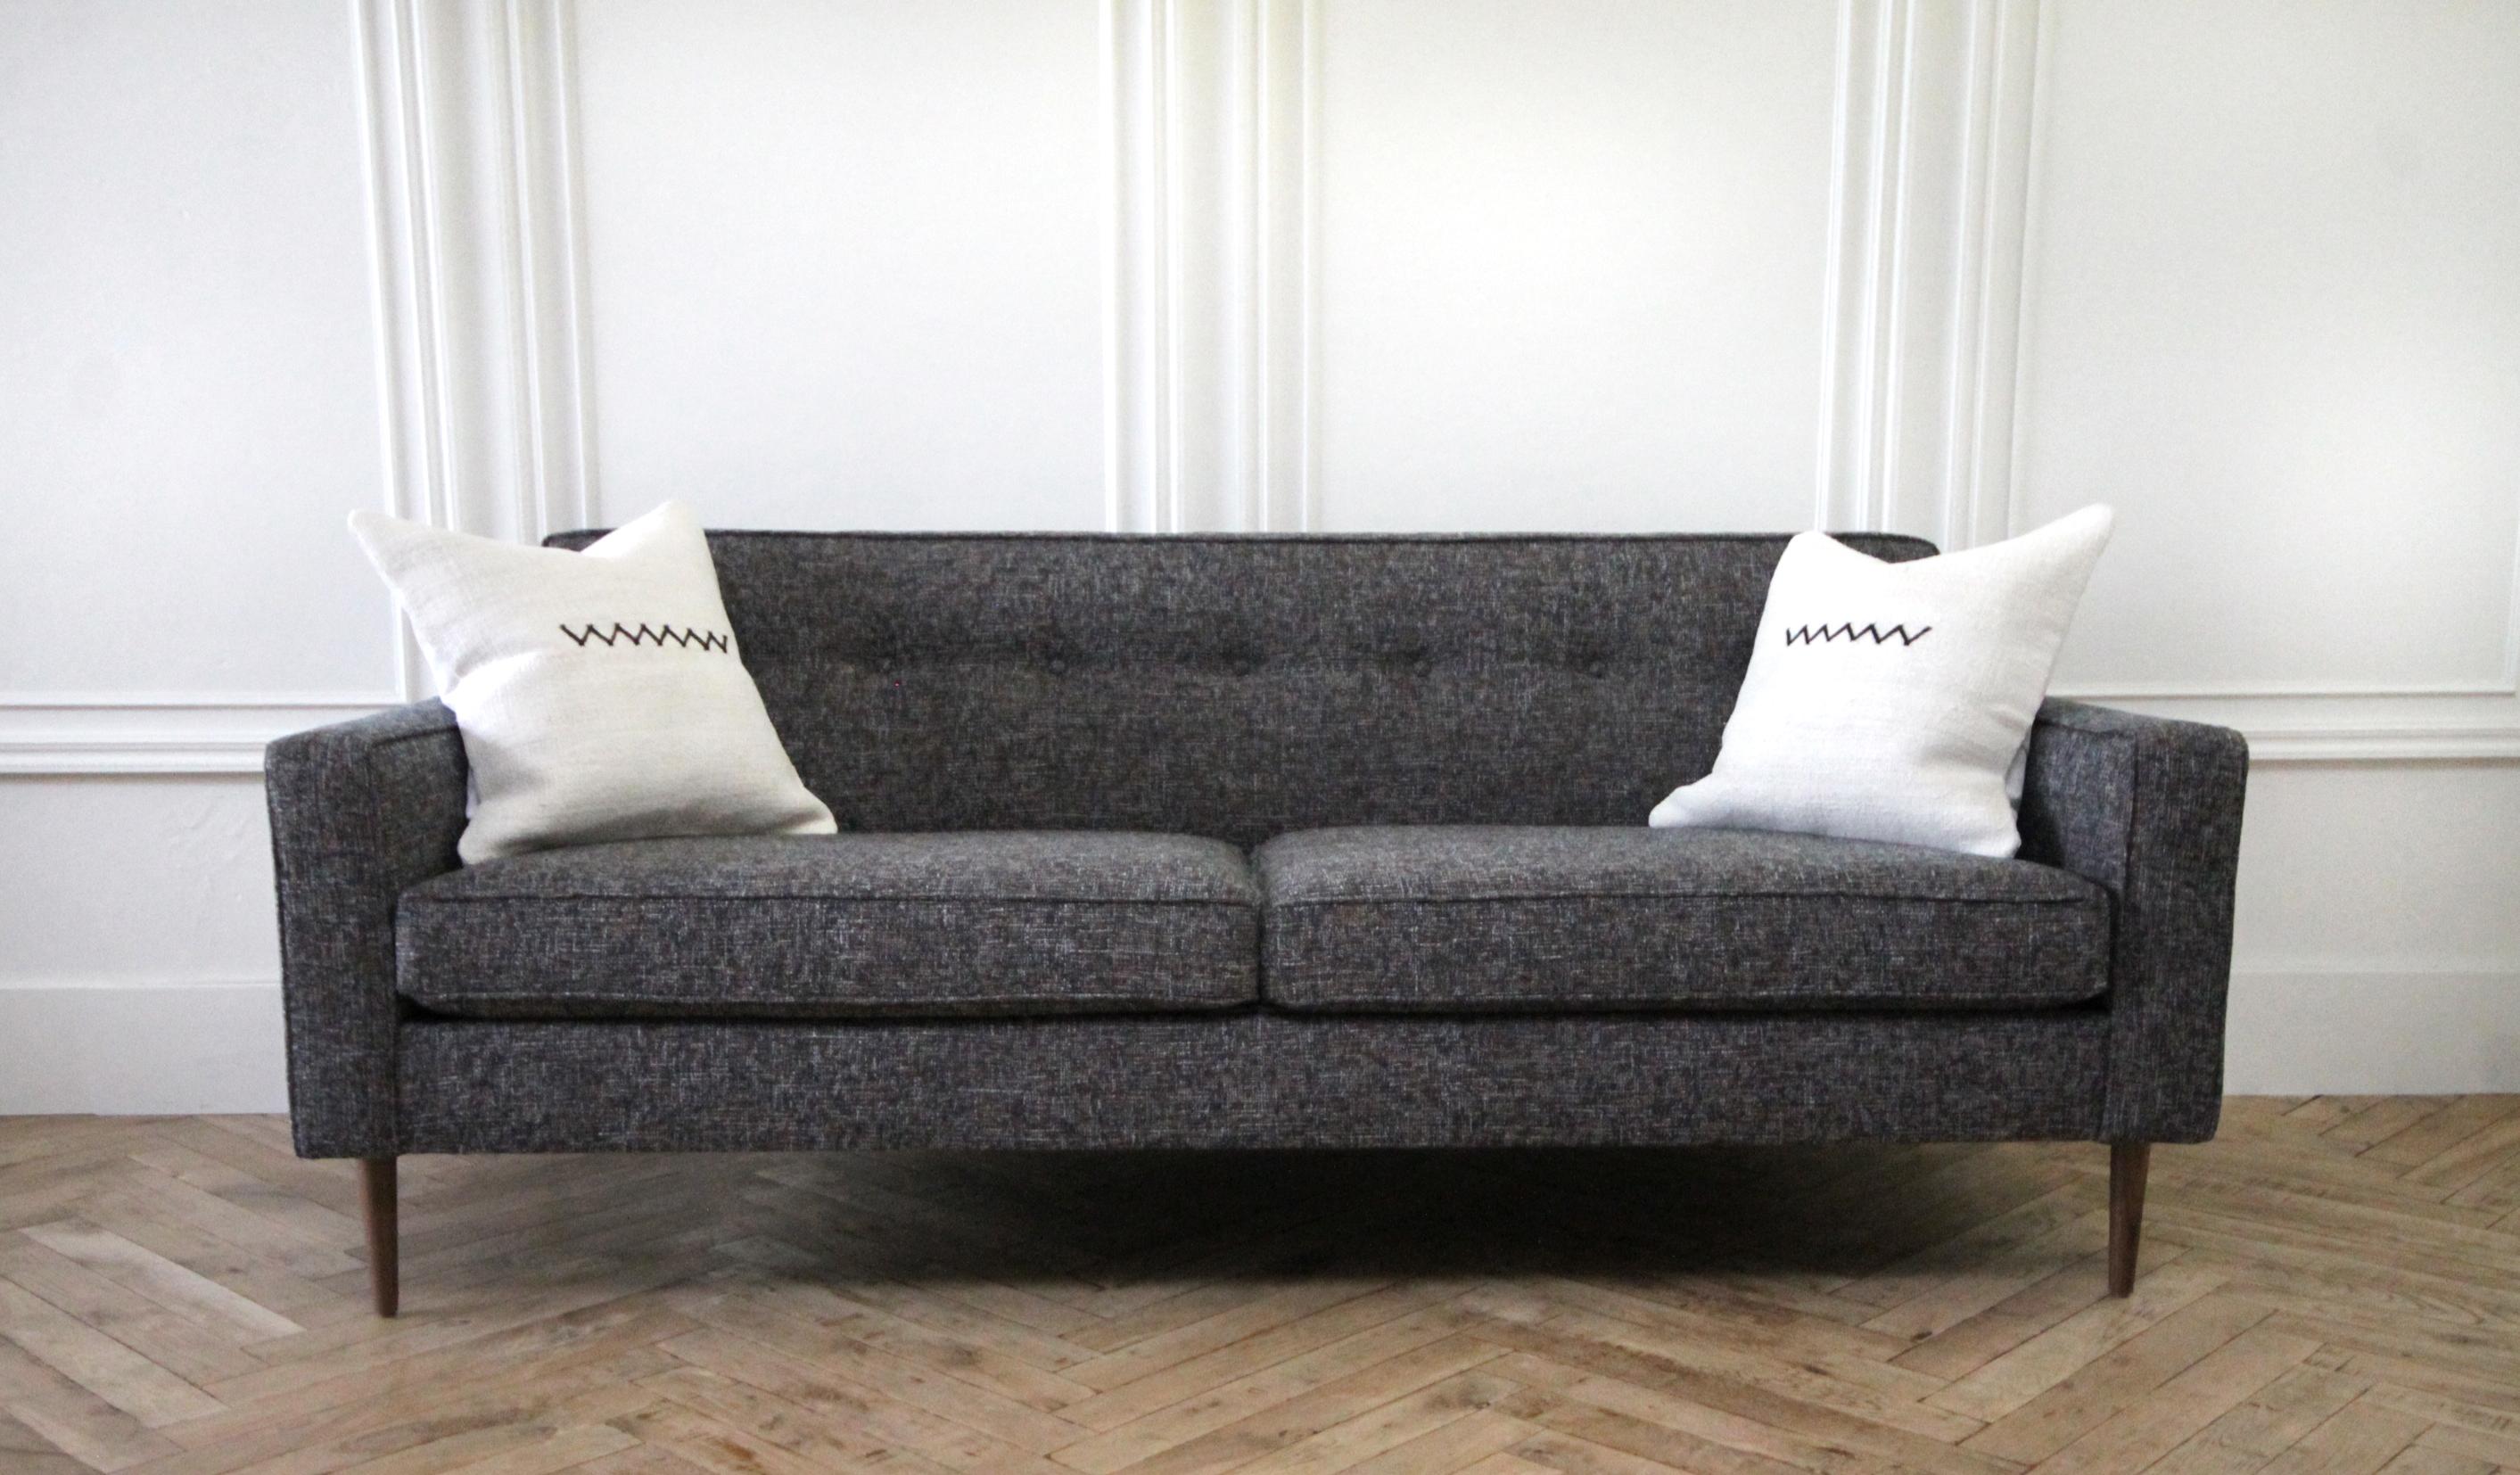 Custom made vintage modern style sofa new
This sample measures: 80